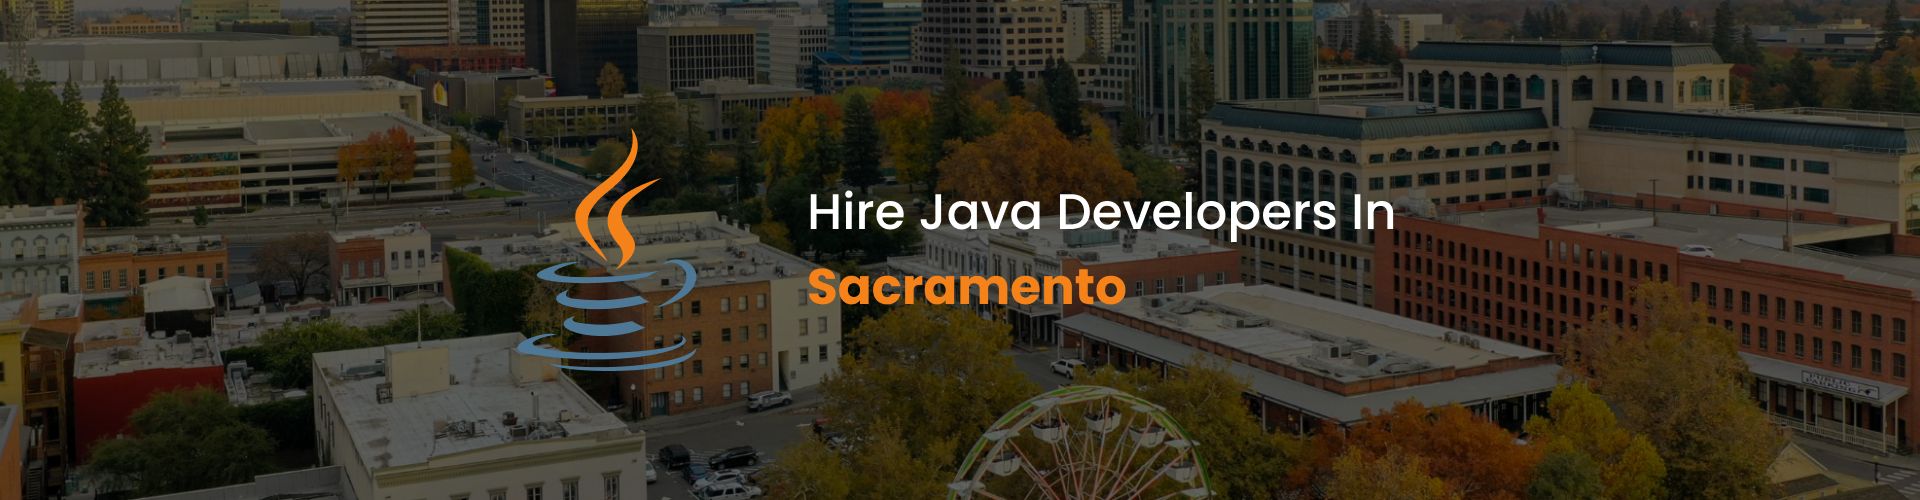 hire java developers in sacramento